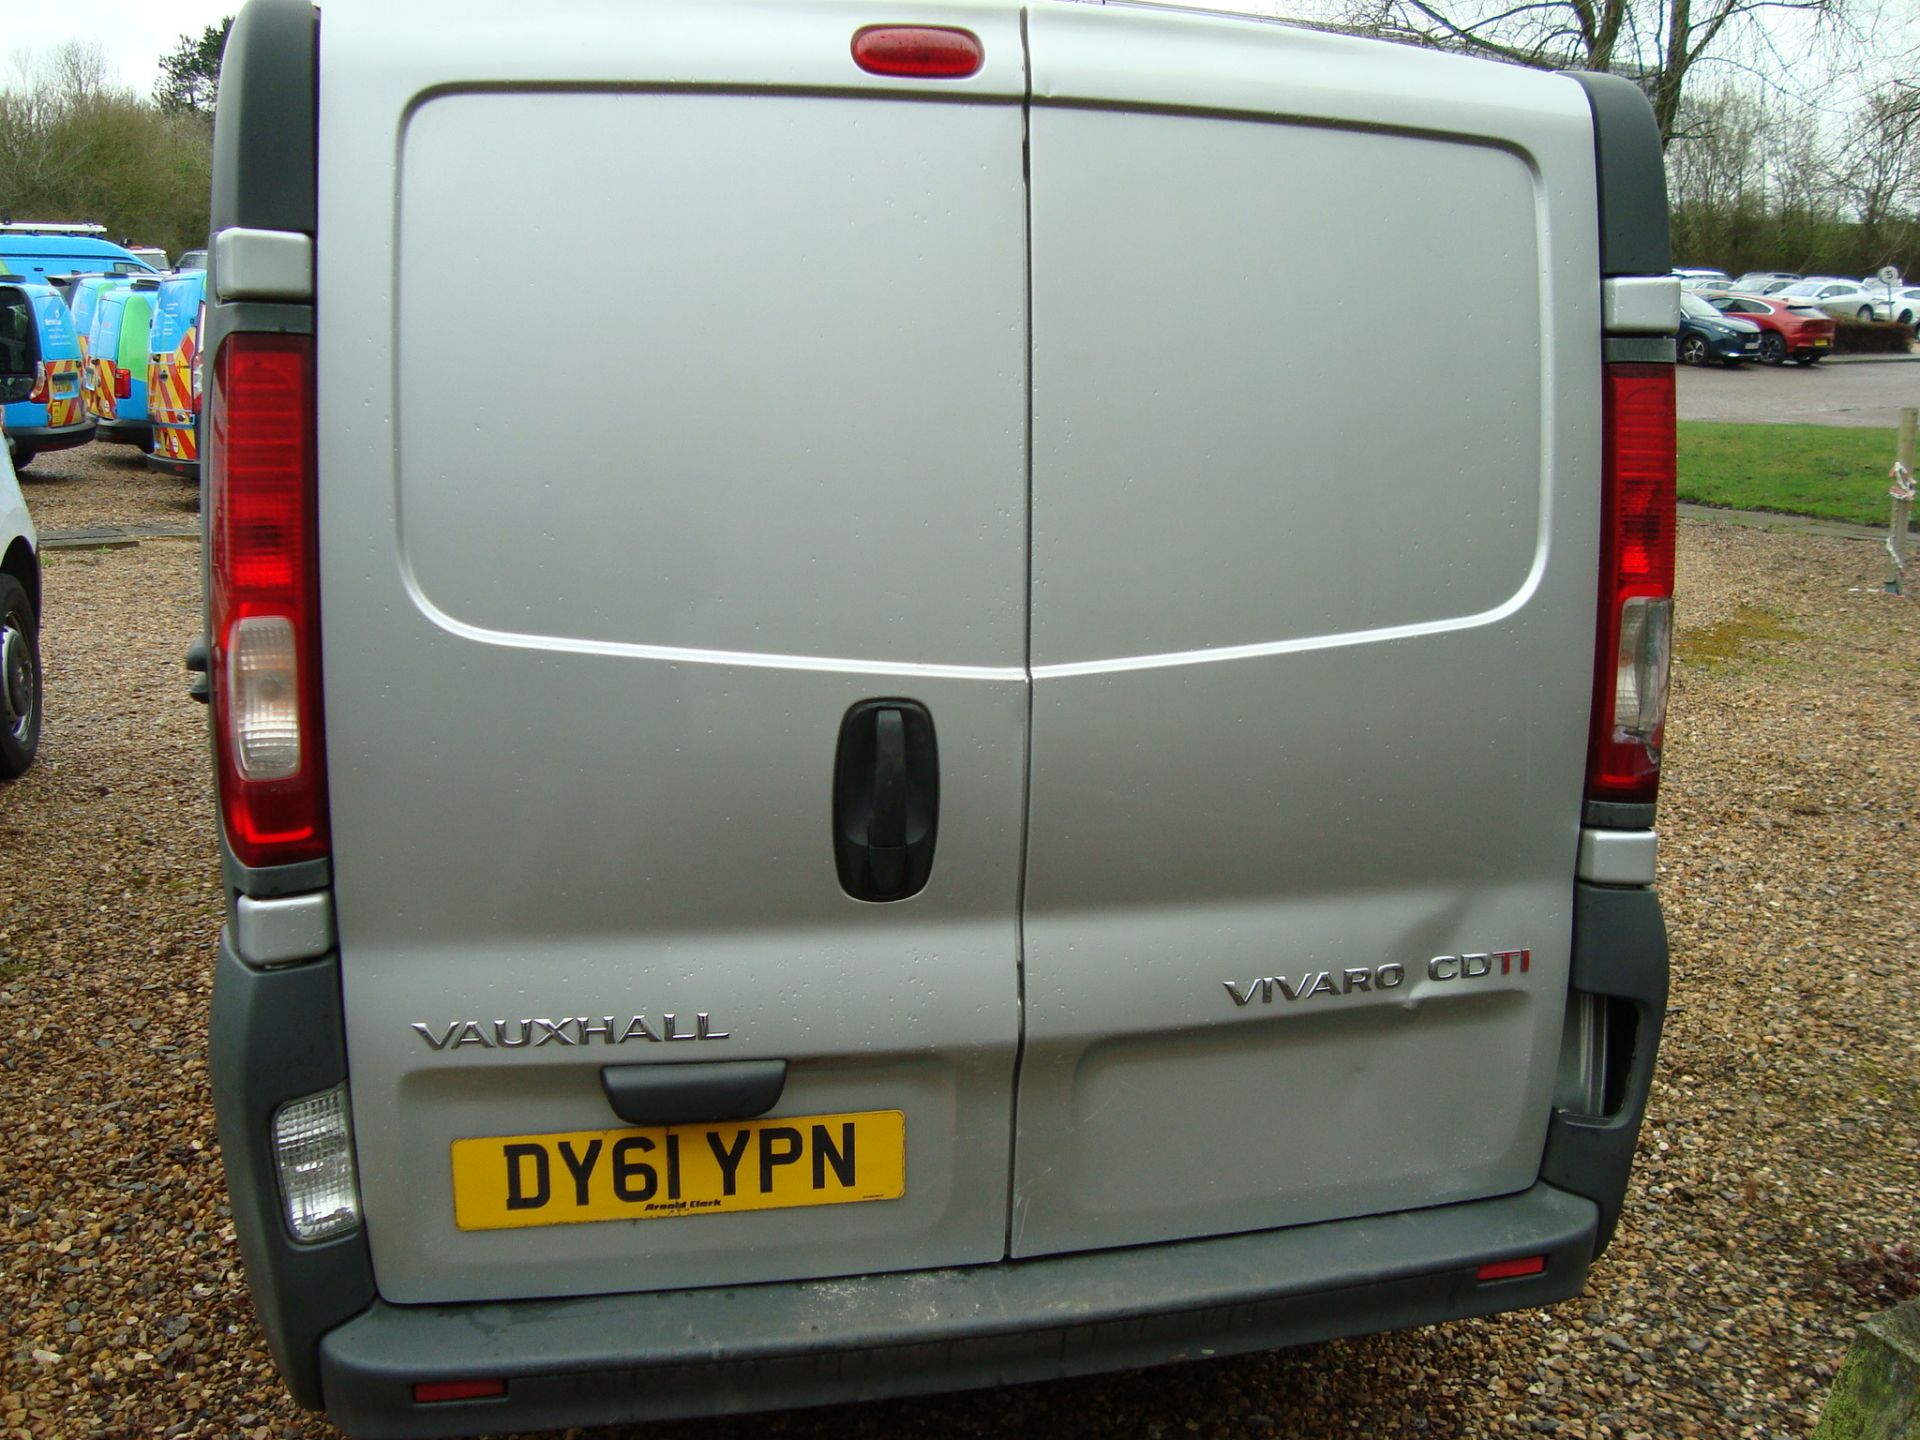 Vauxhall Vivaro 2900 CDTI 113 2.0 diesel long wheelbase six seat crew cab panel van - Image 7 of 14